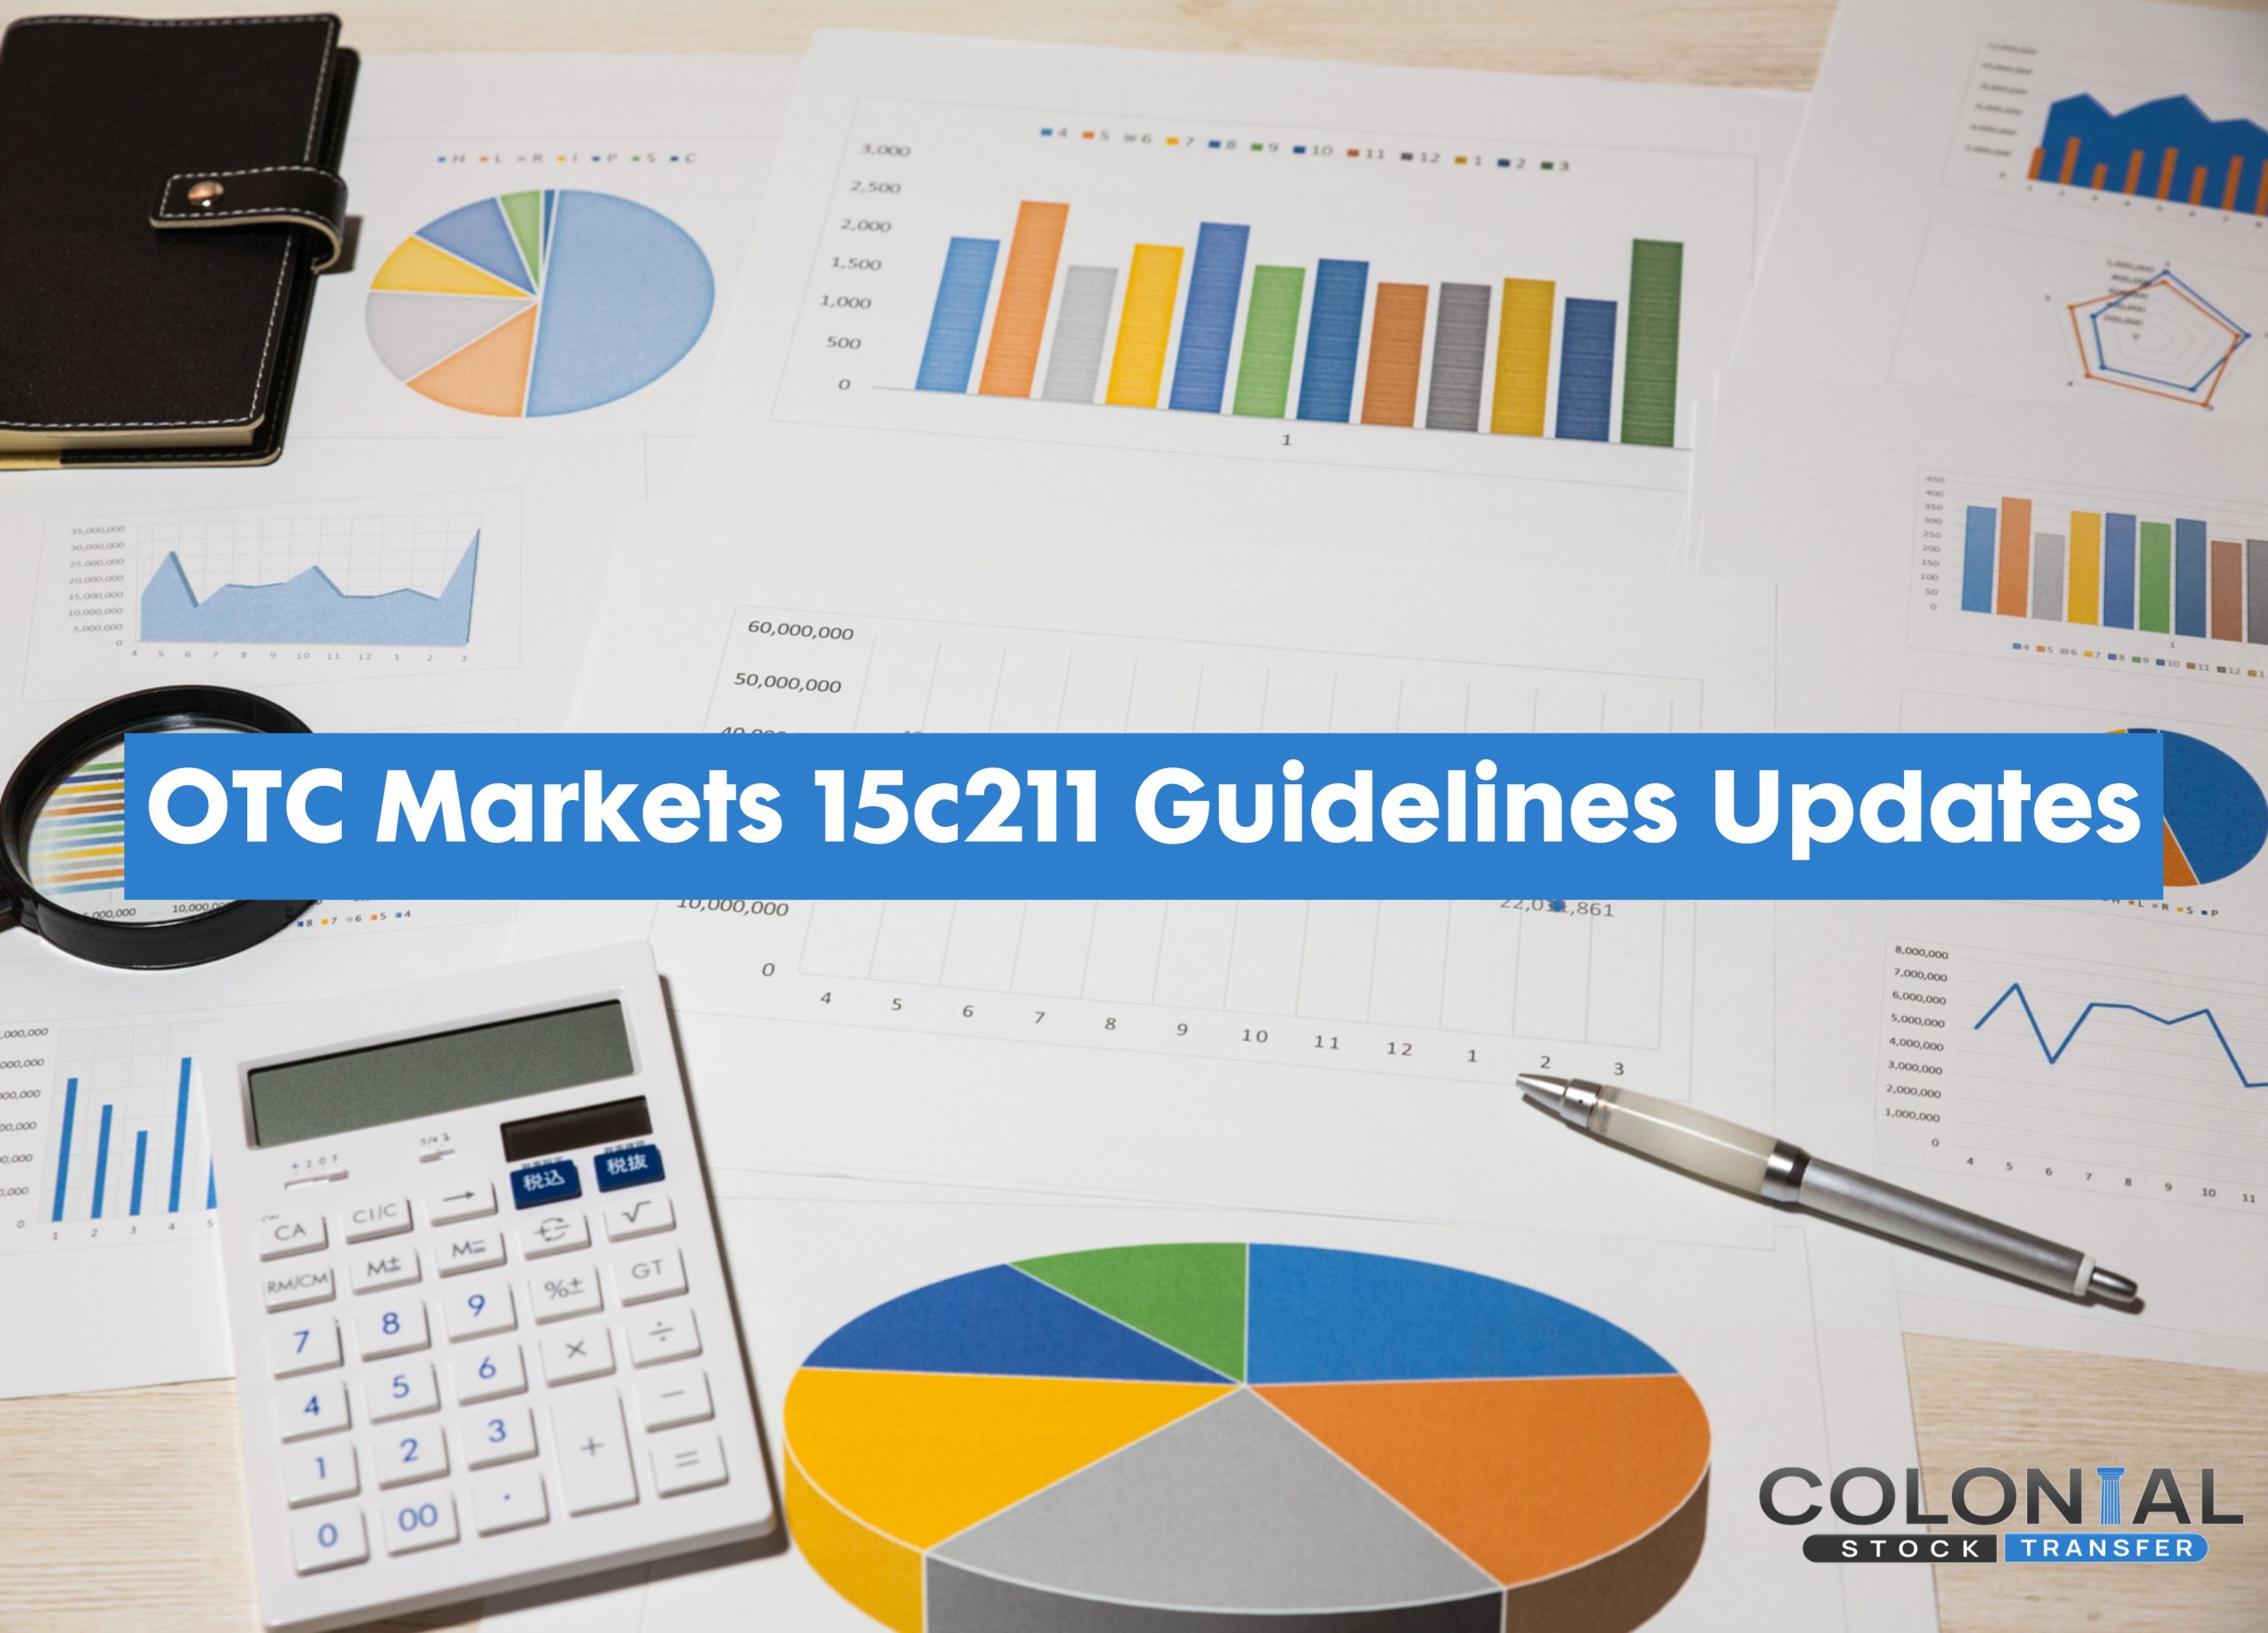 OTC Markets 15c211 Guidelines Updates